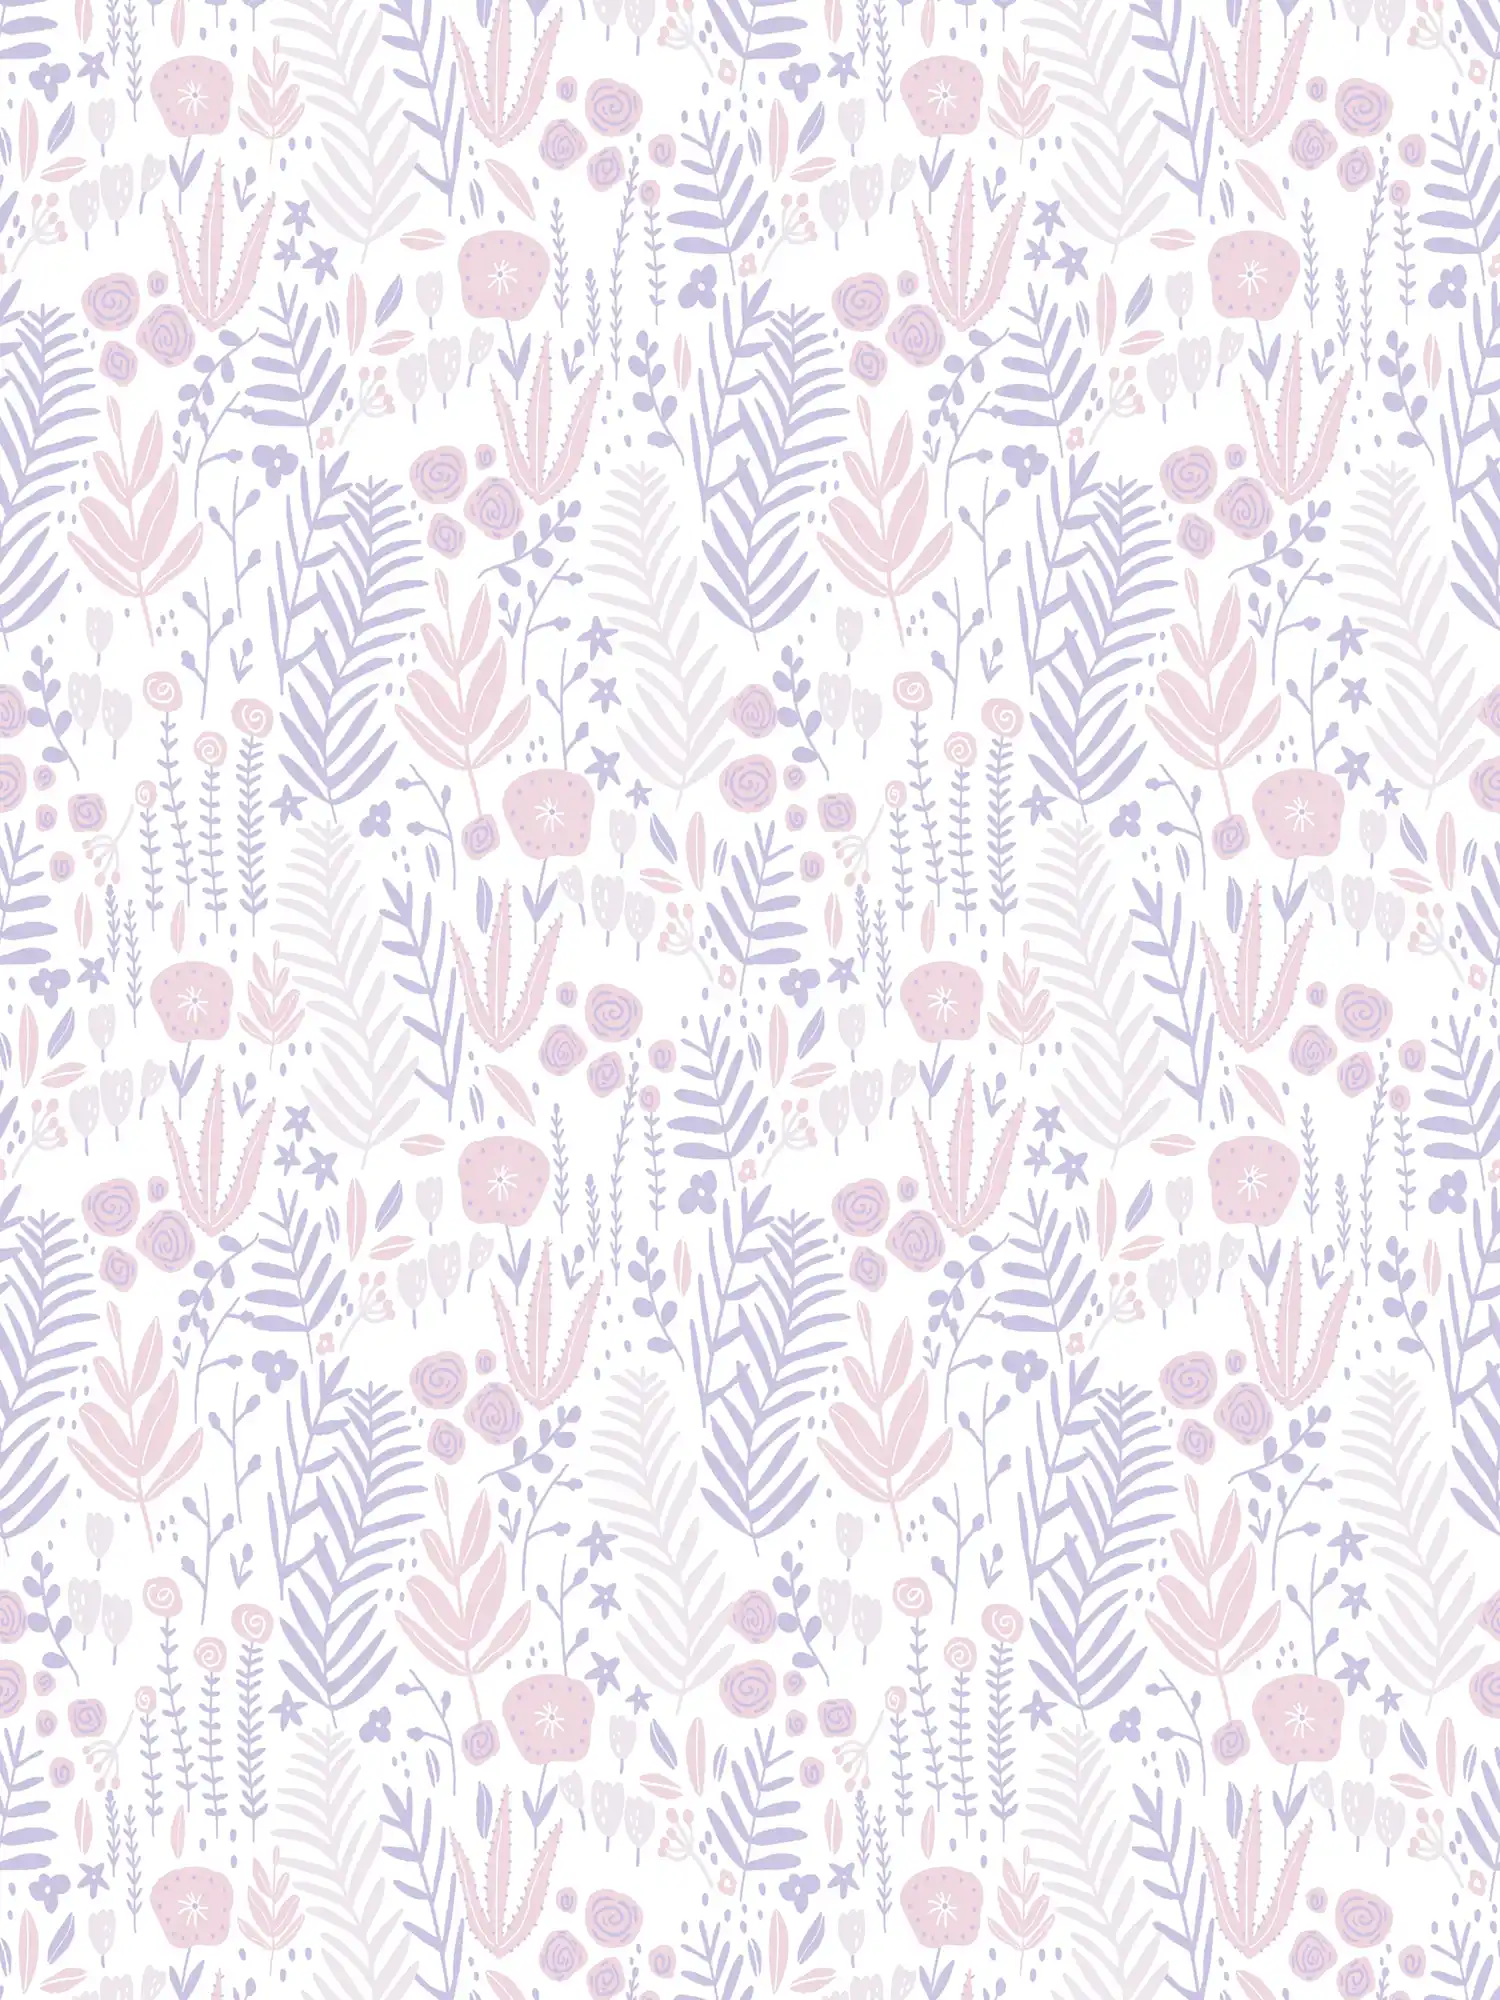         Girls room wallpaper plants - purple, pink, white
    